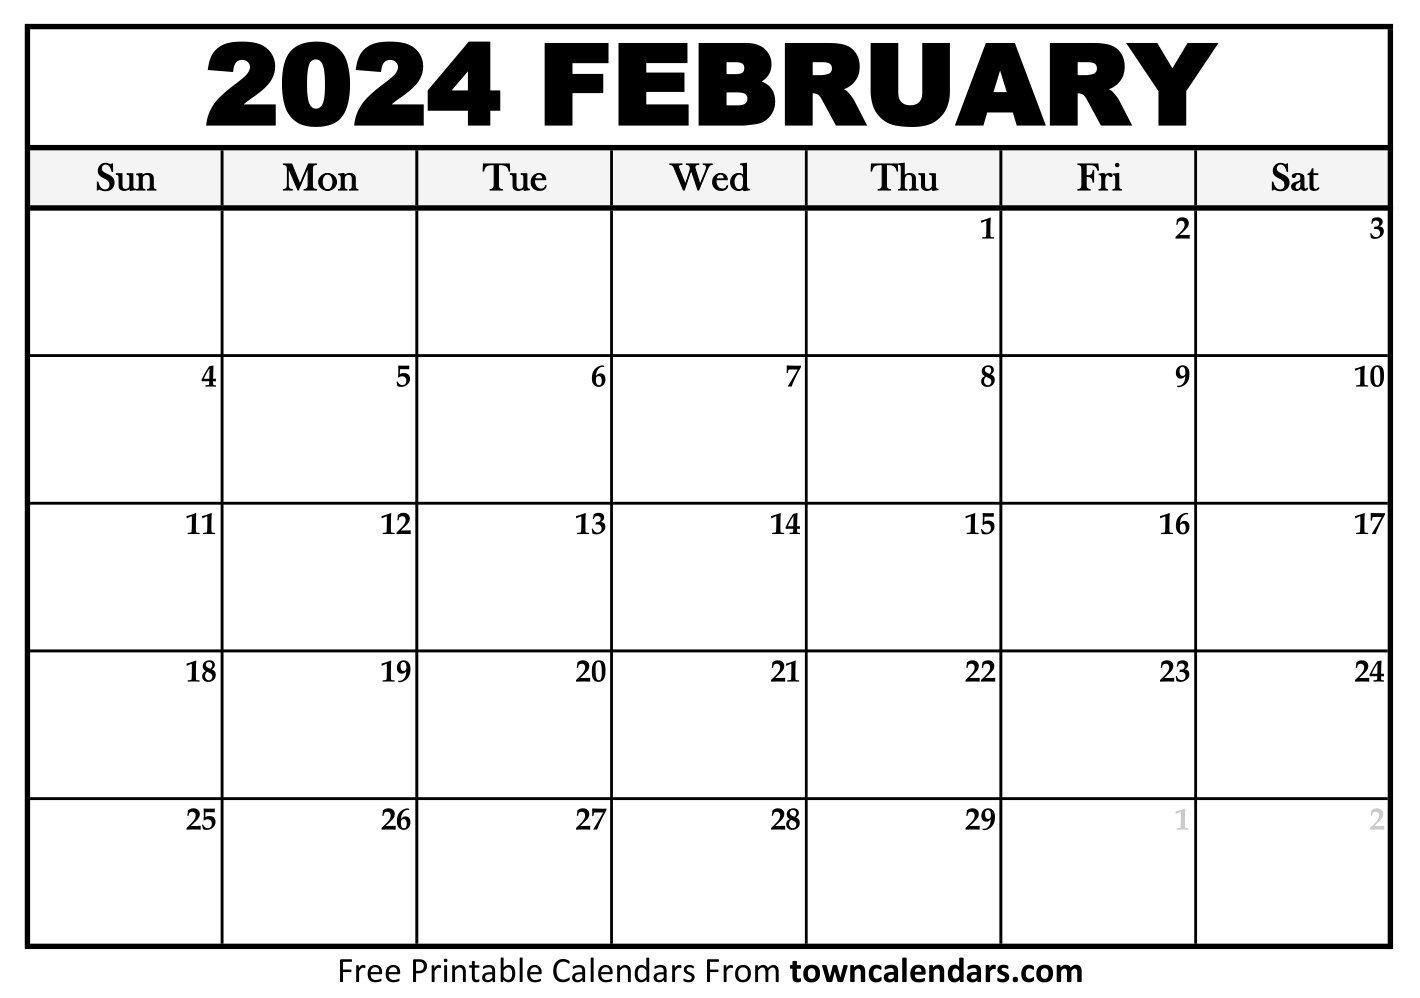 Printable February 2024 Calendar - Towncalendars with regard to Free Printable Calendar 2024 Weekdays Only